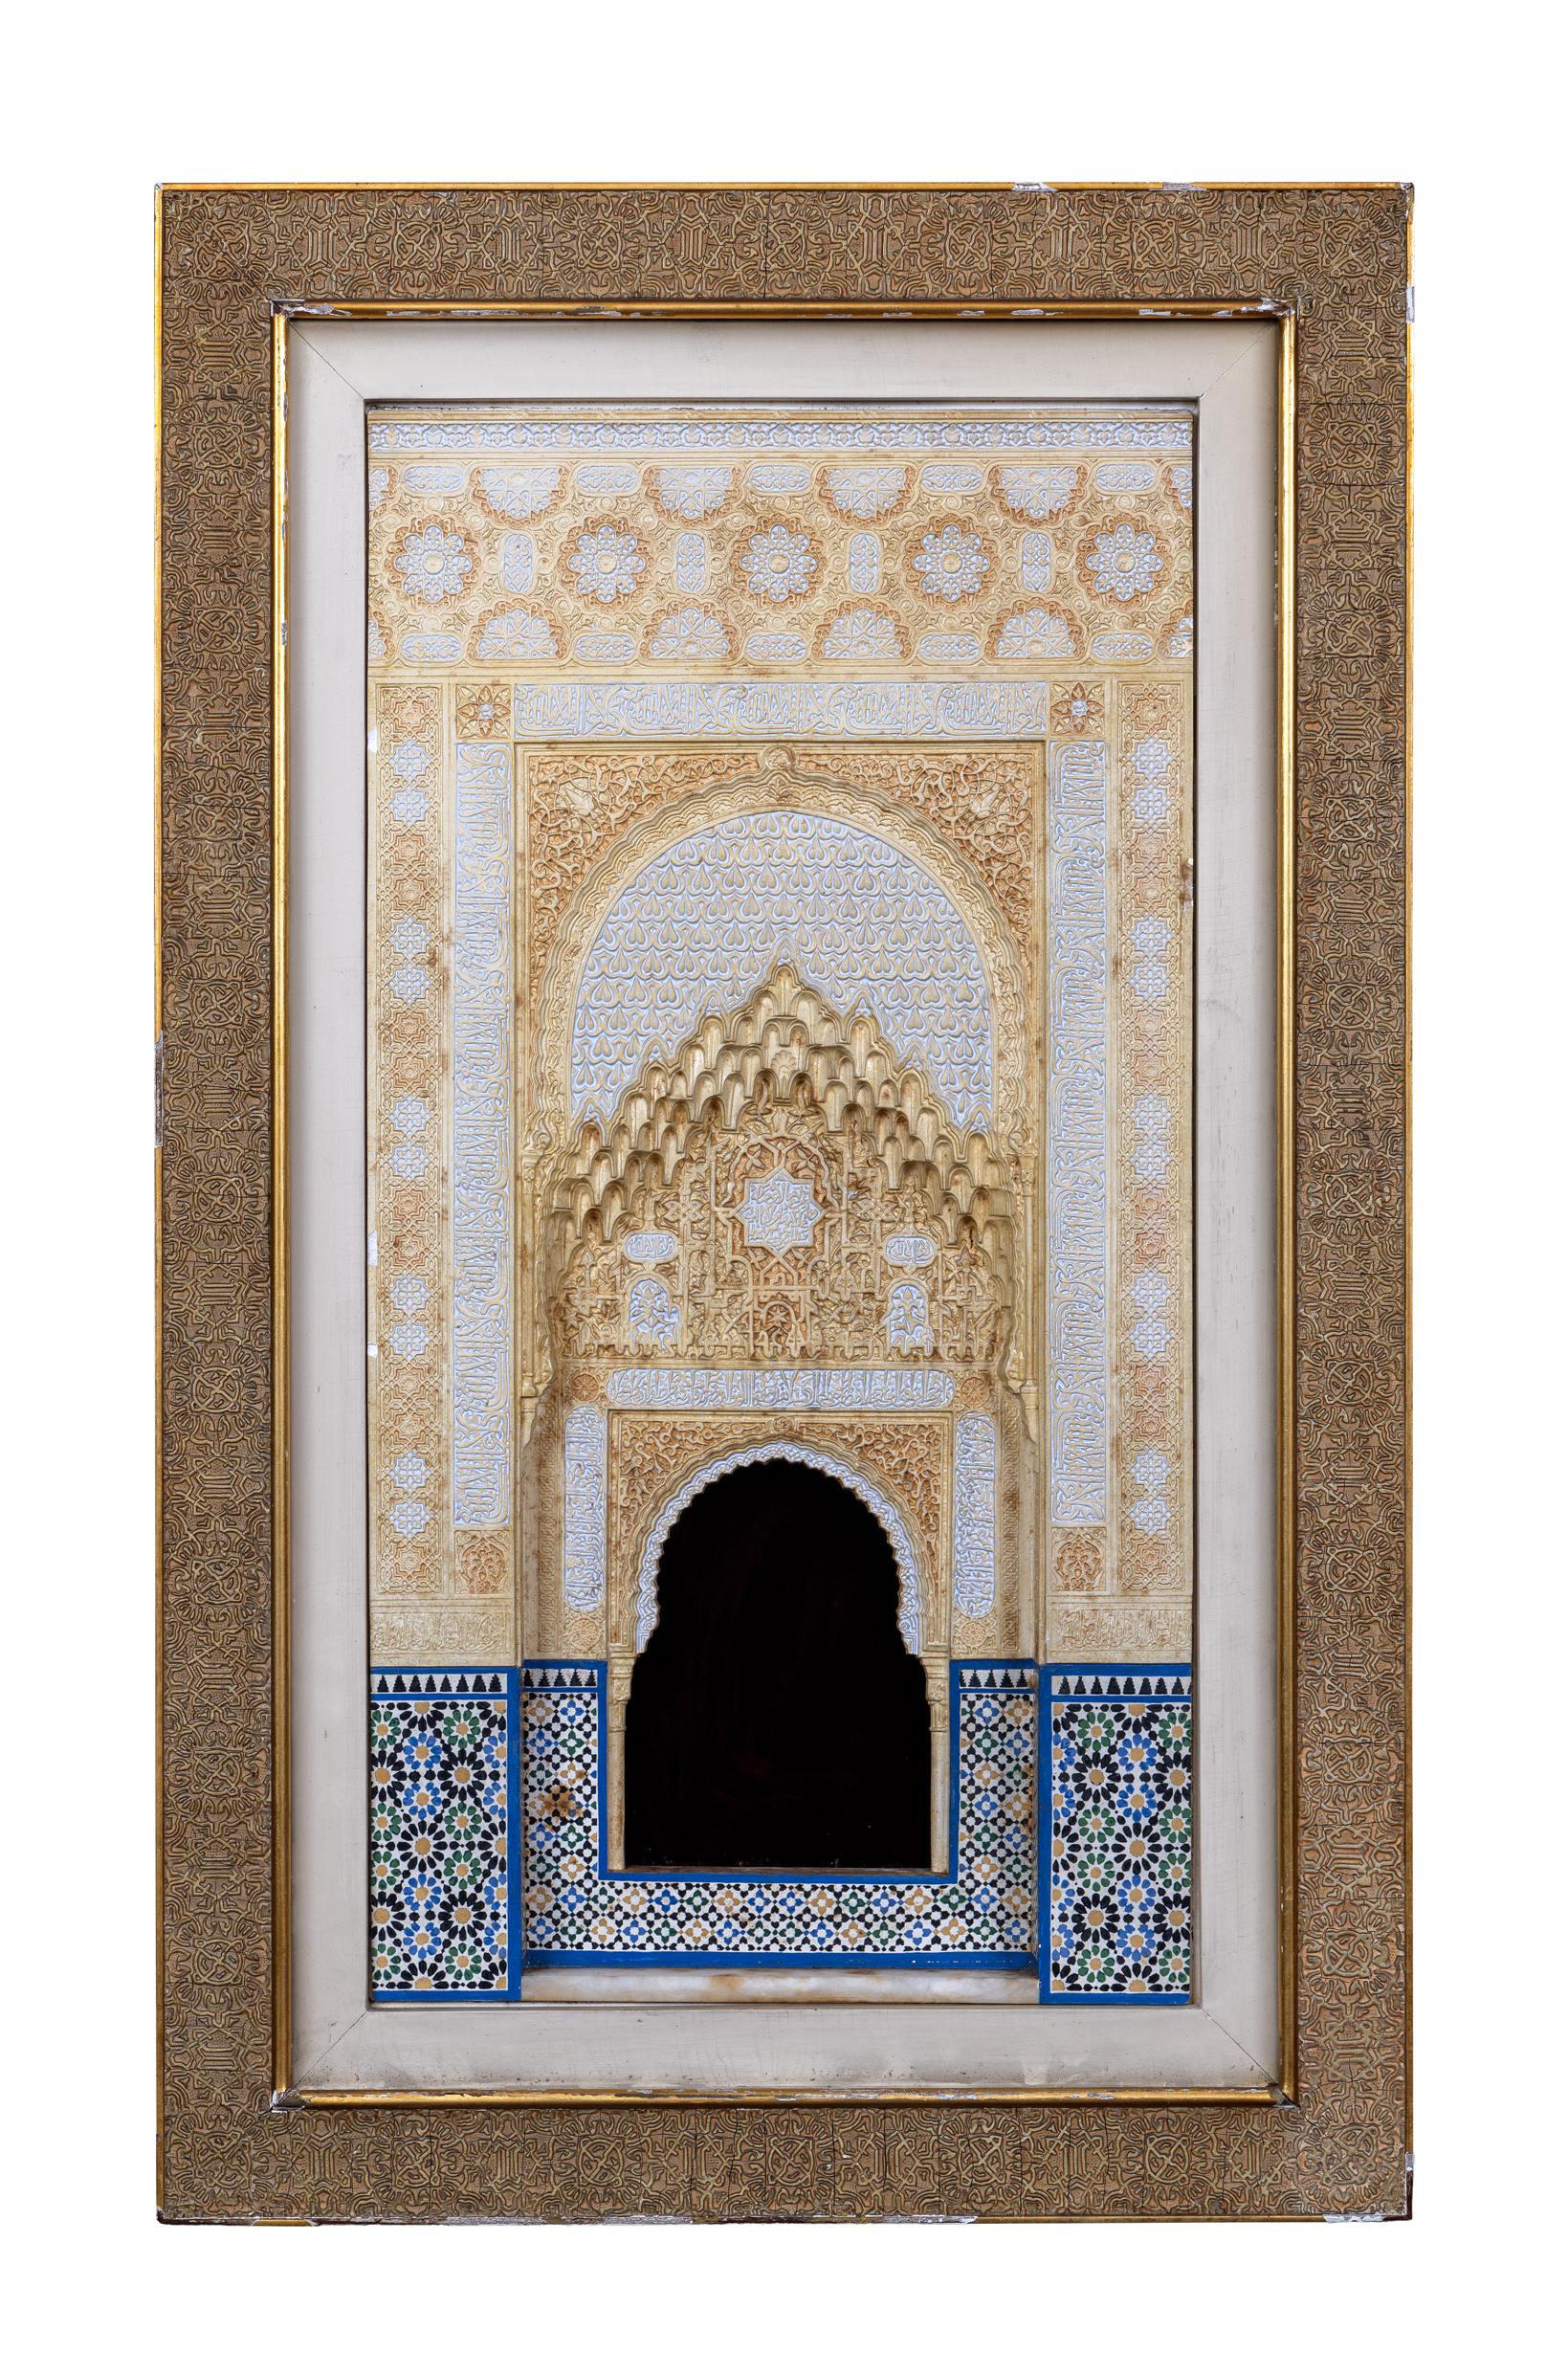 Grande plaque architecturale espagnole de l'Alhambra - Mixed Media Art de Rafael Contreras